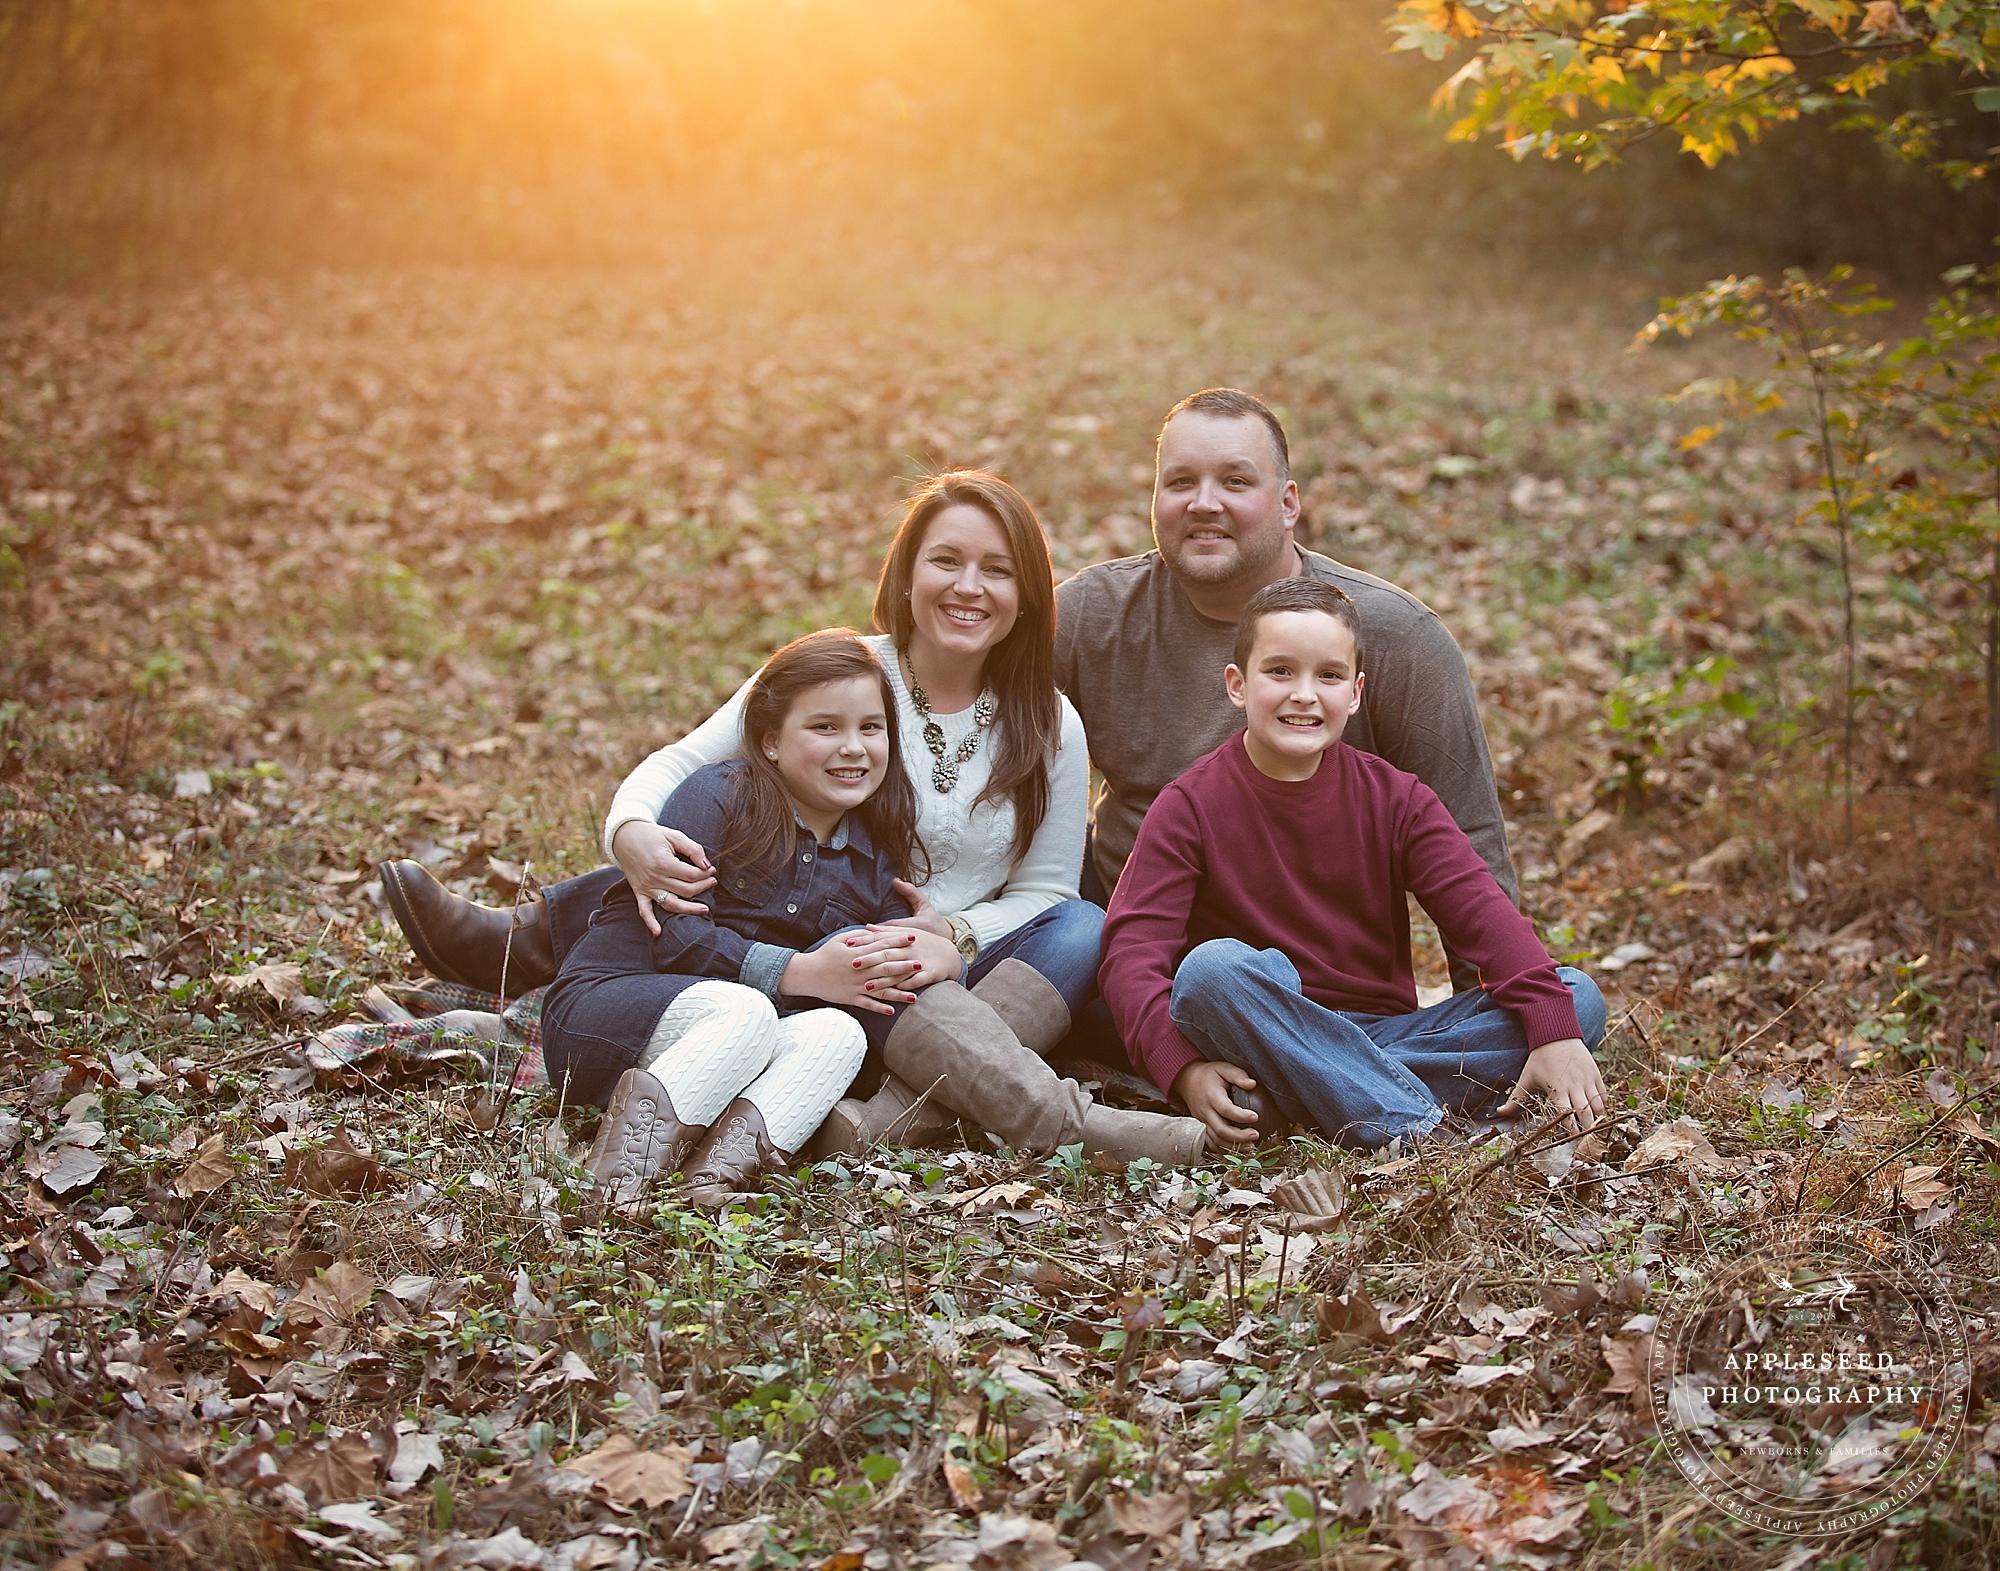 Atlanta Family Photographer | Jones Family | Appleseed Photography